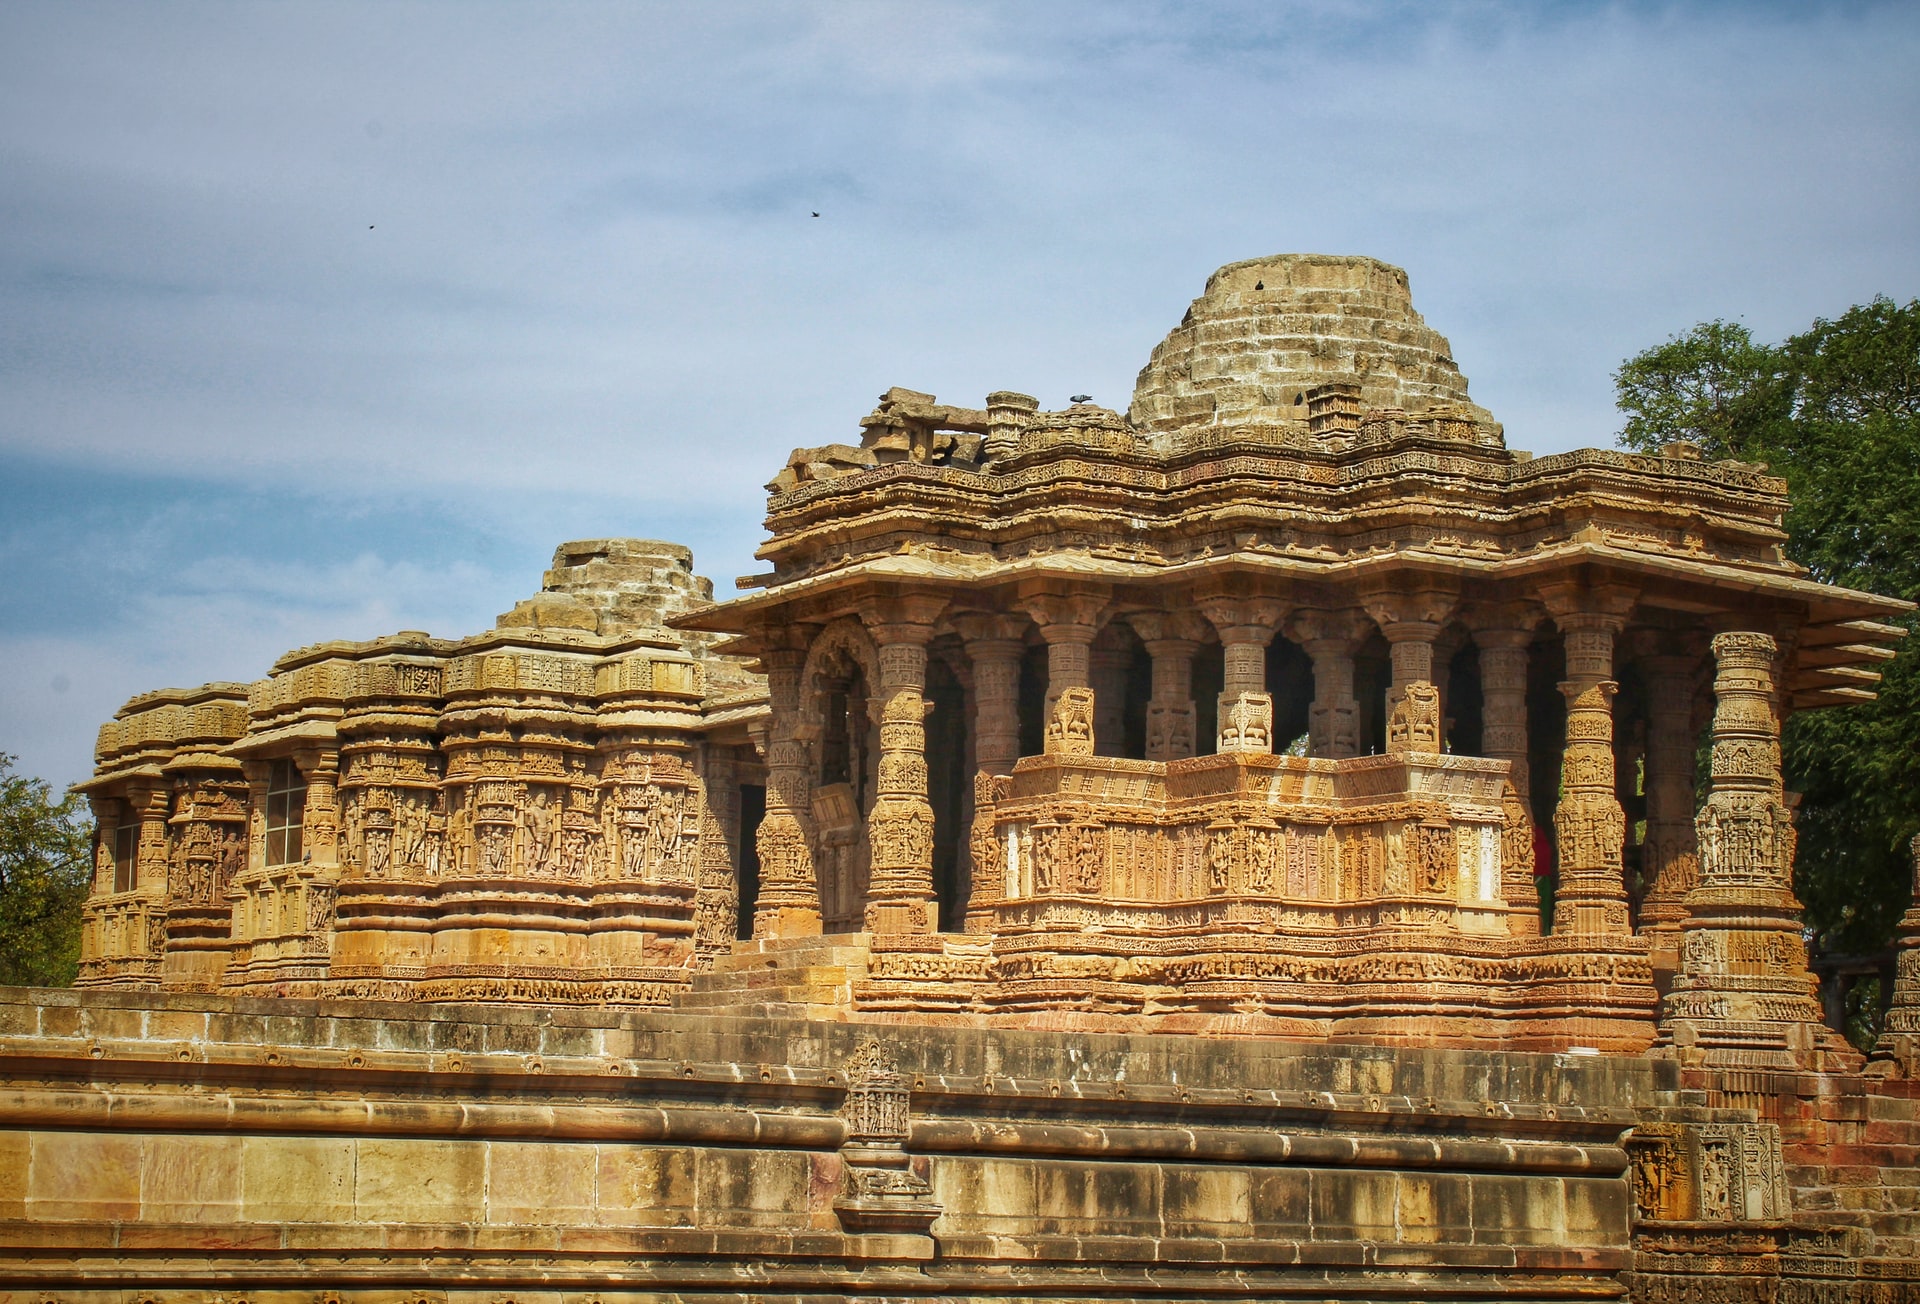 The Sun Temple of India